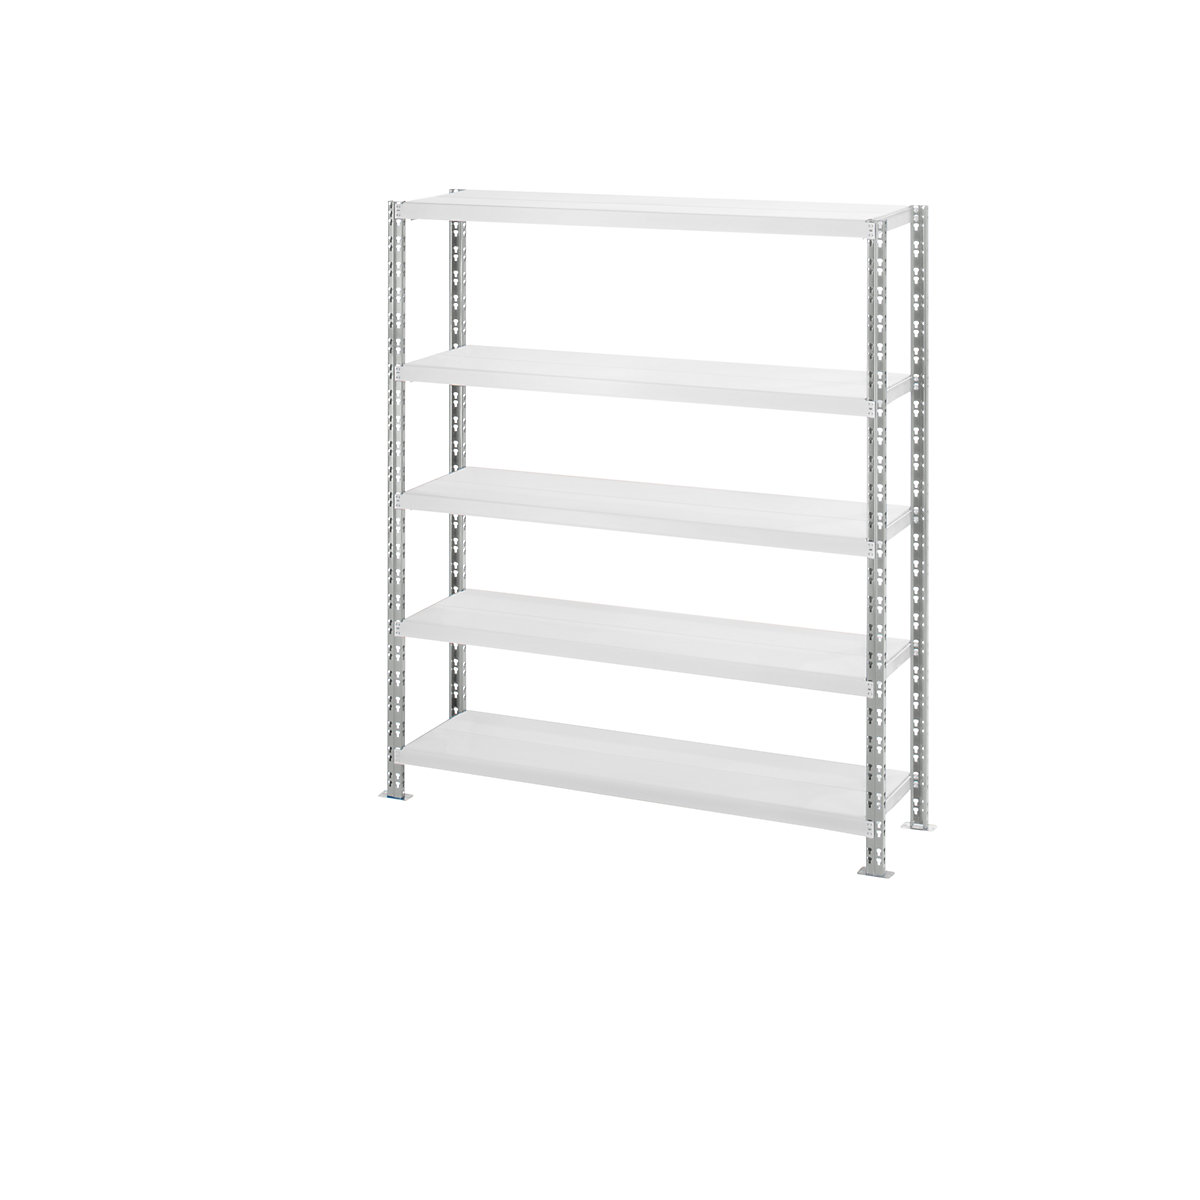 Wide span shelf unit with sheet steel shelves, depth 500 mm, standard shelf unit, HxW 1820 x 1550 mm